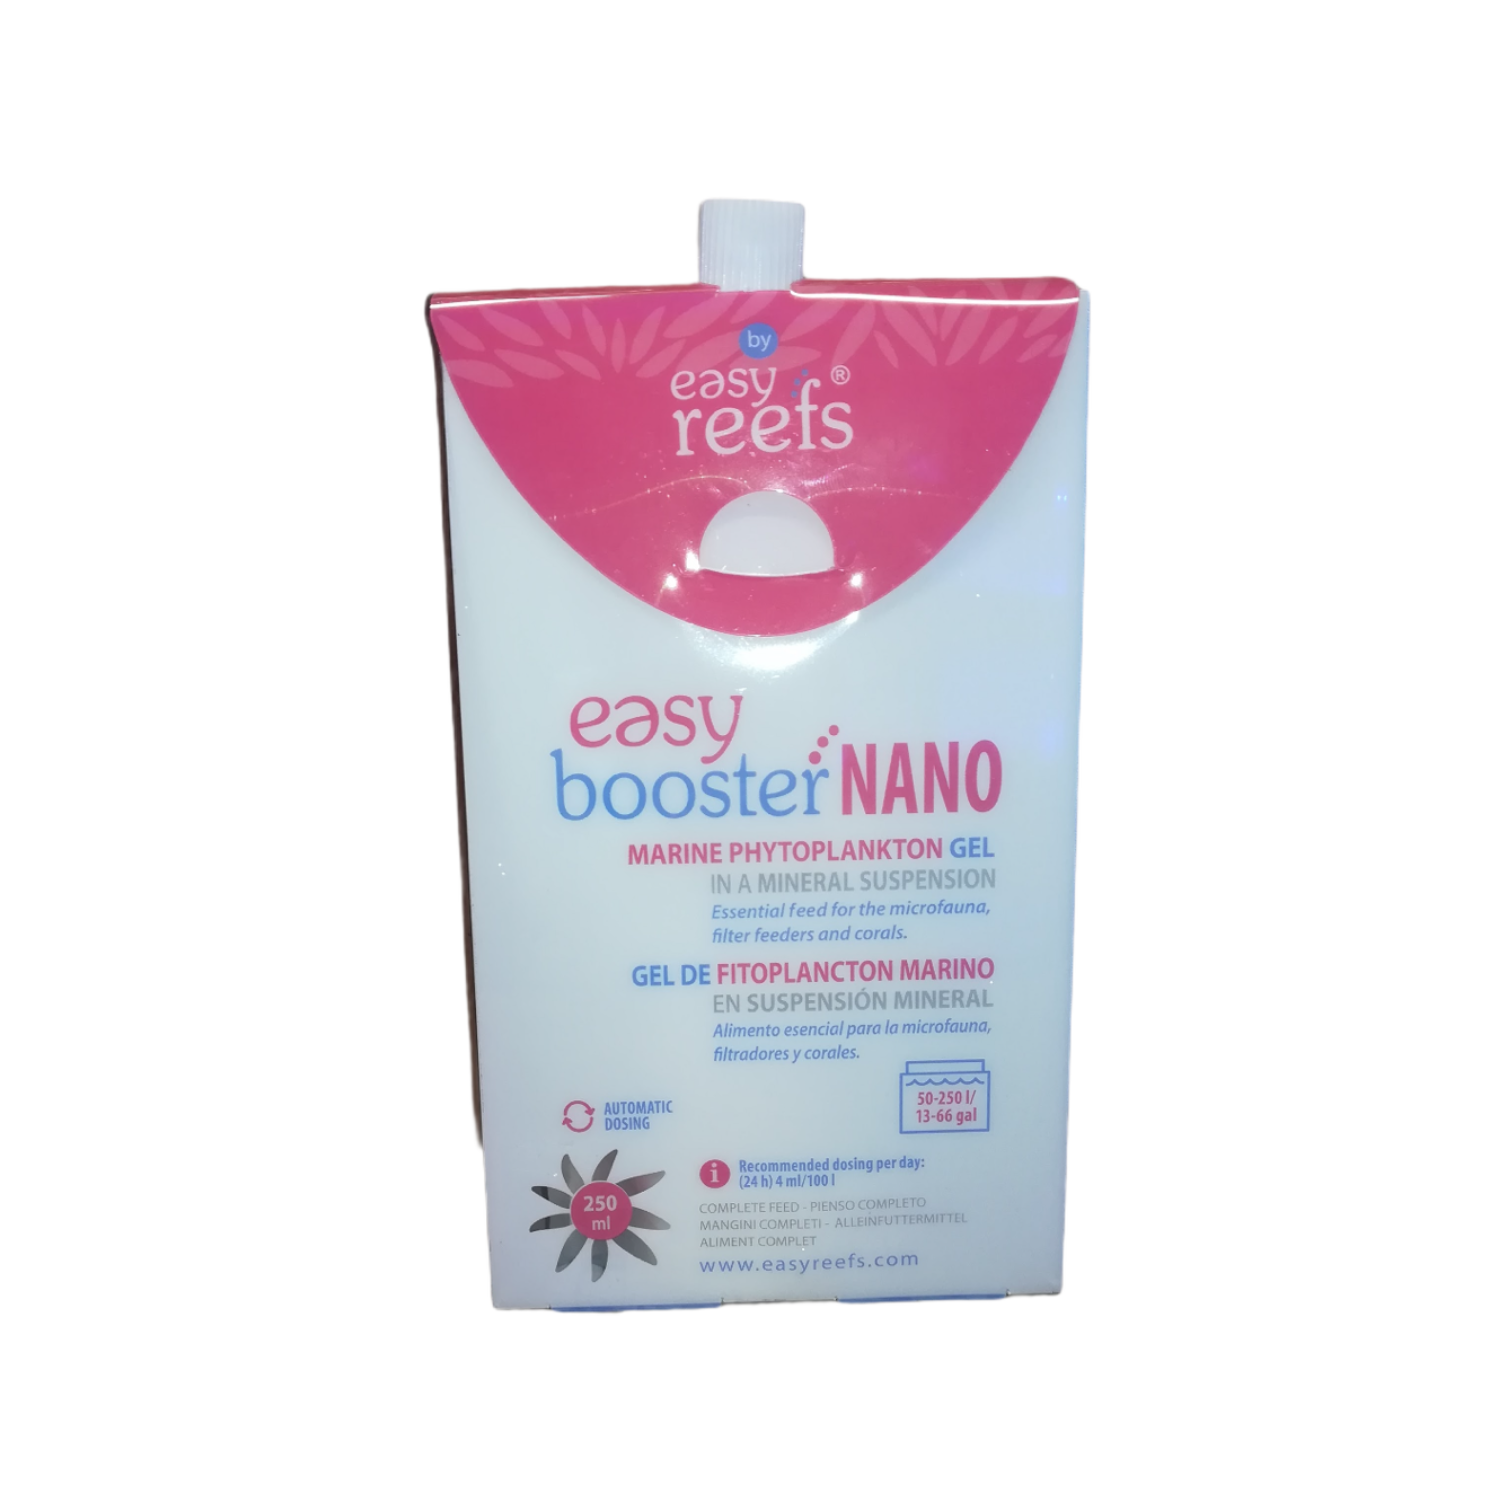 easy reefs Easybooster NANO - 250ml